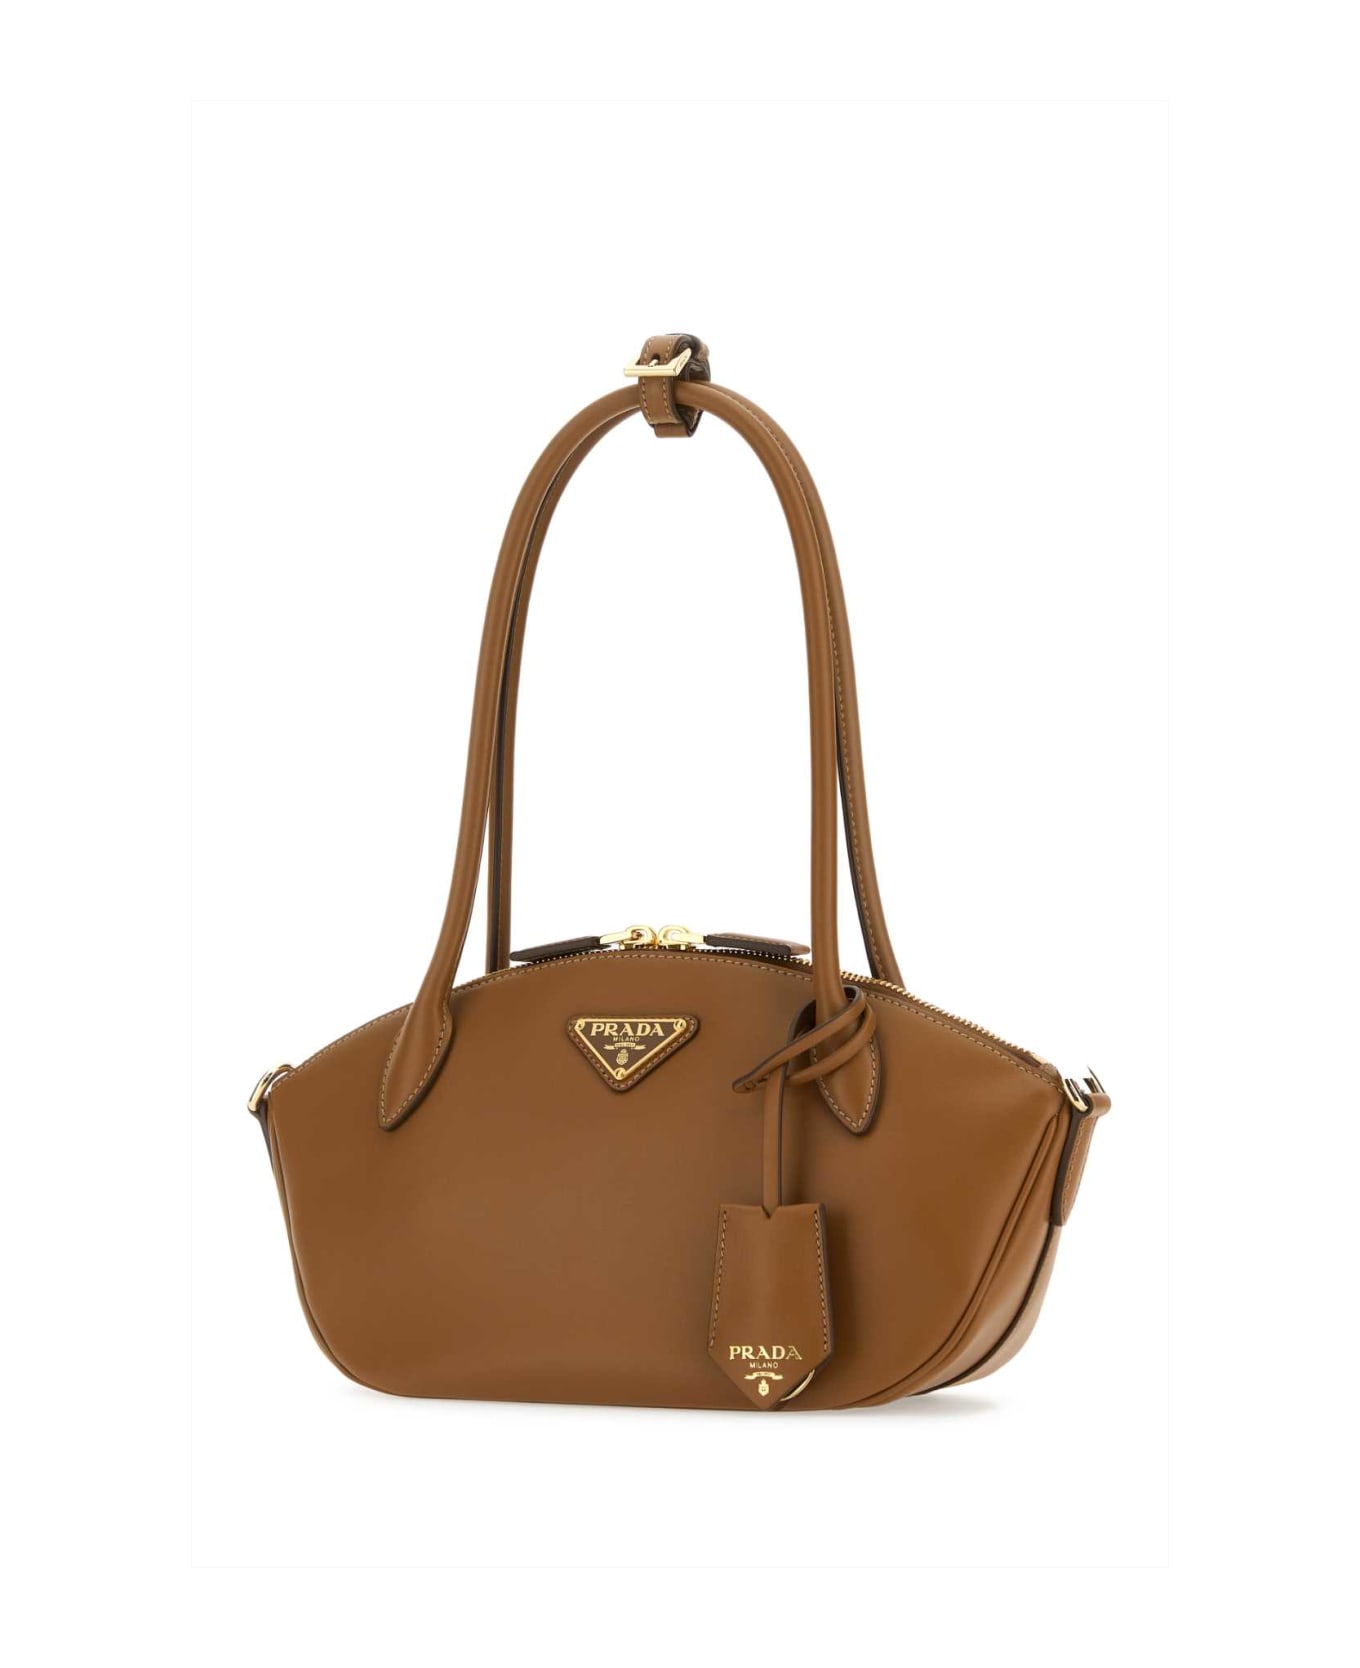 Prada Caramel Leather Small Handbag - CARAMEL0